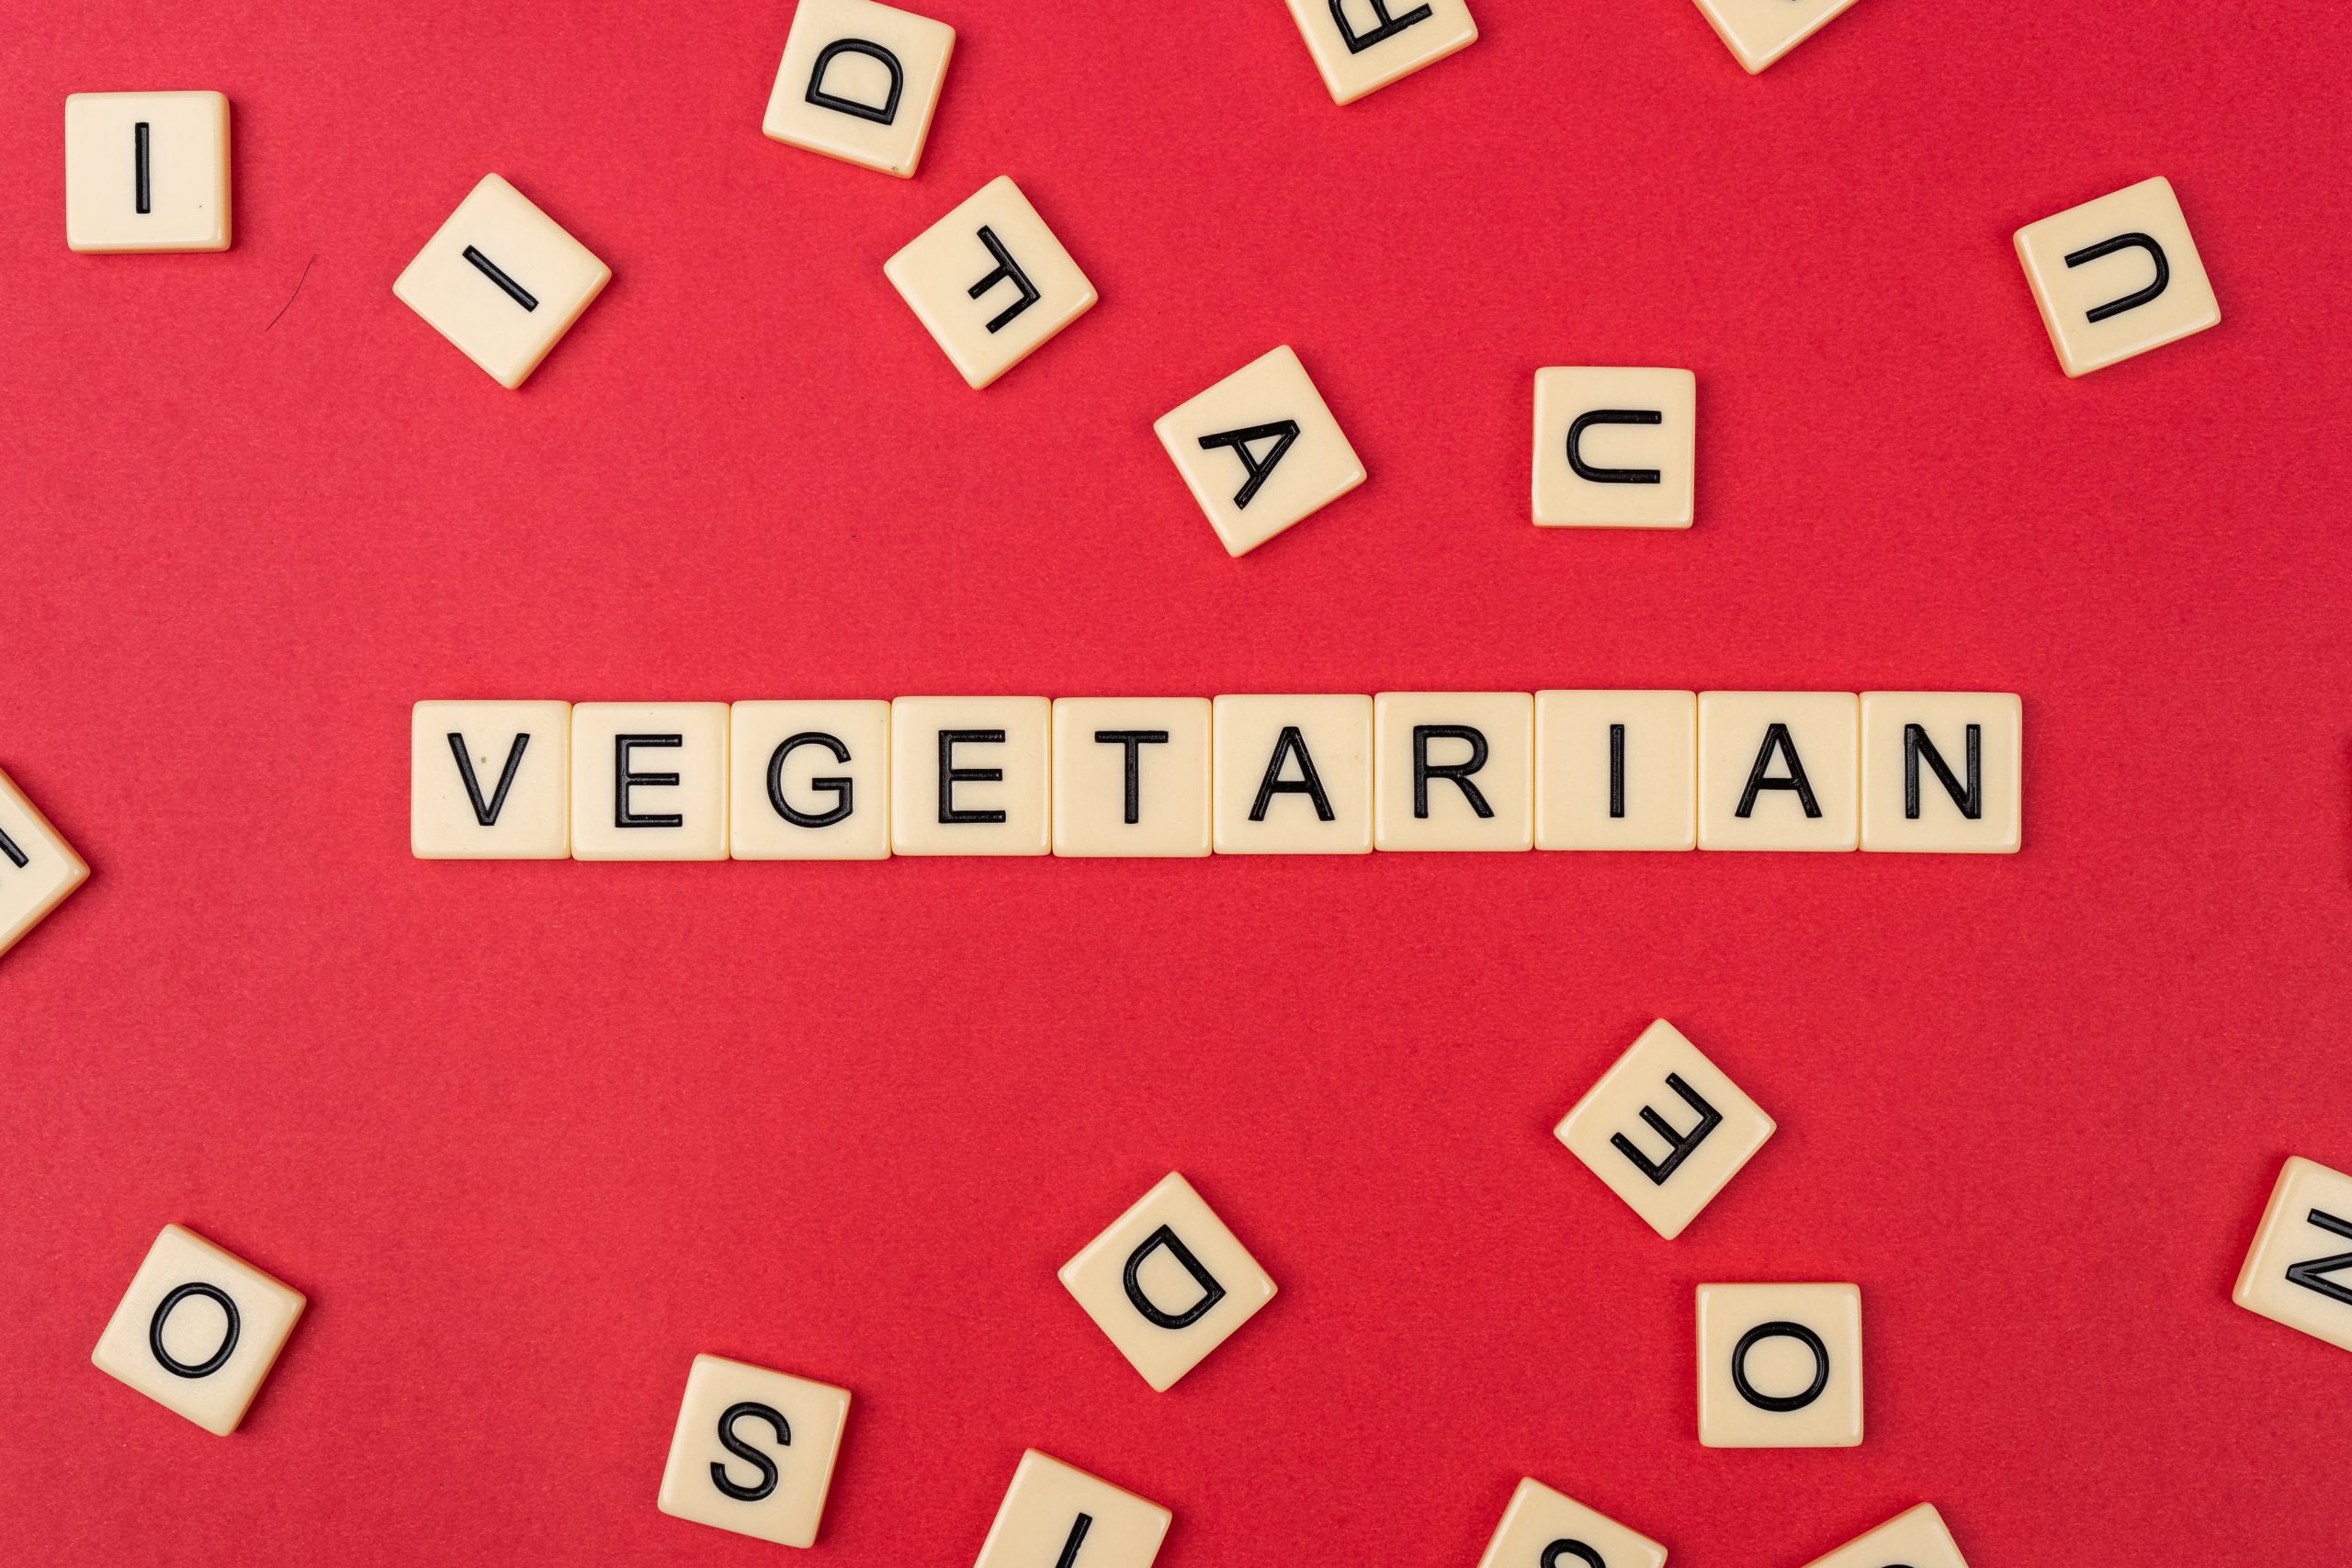 Vegetarian word written with scrabble tiles